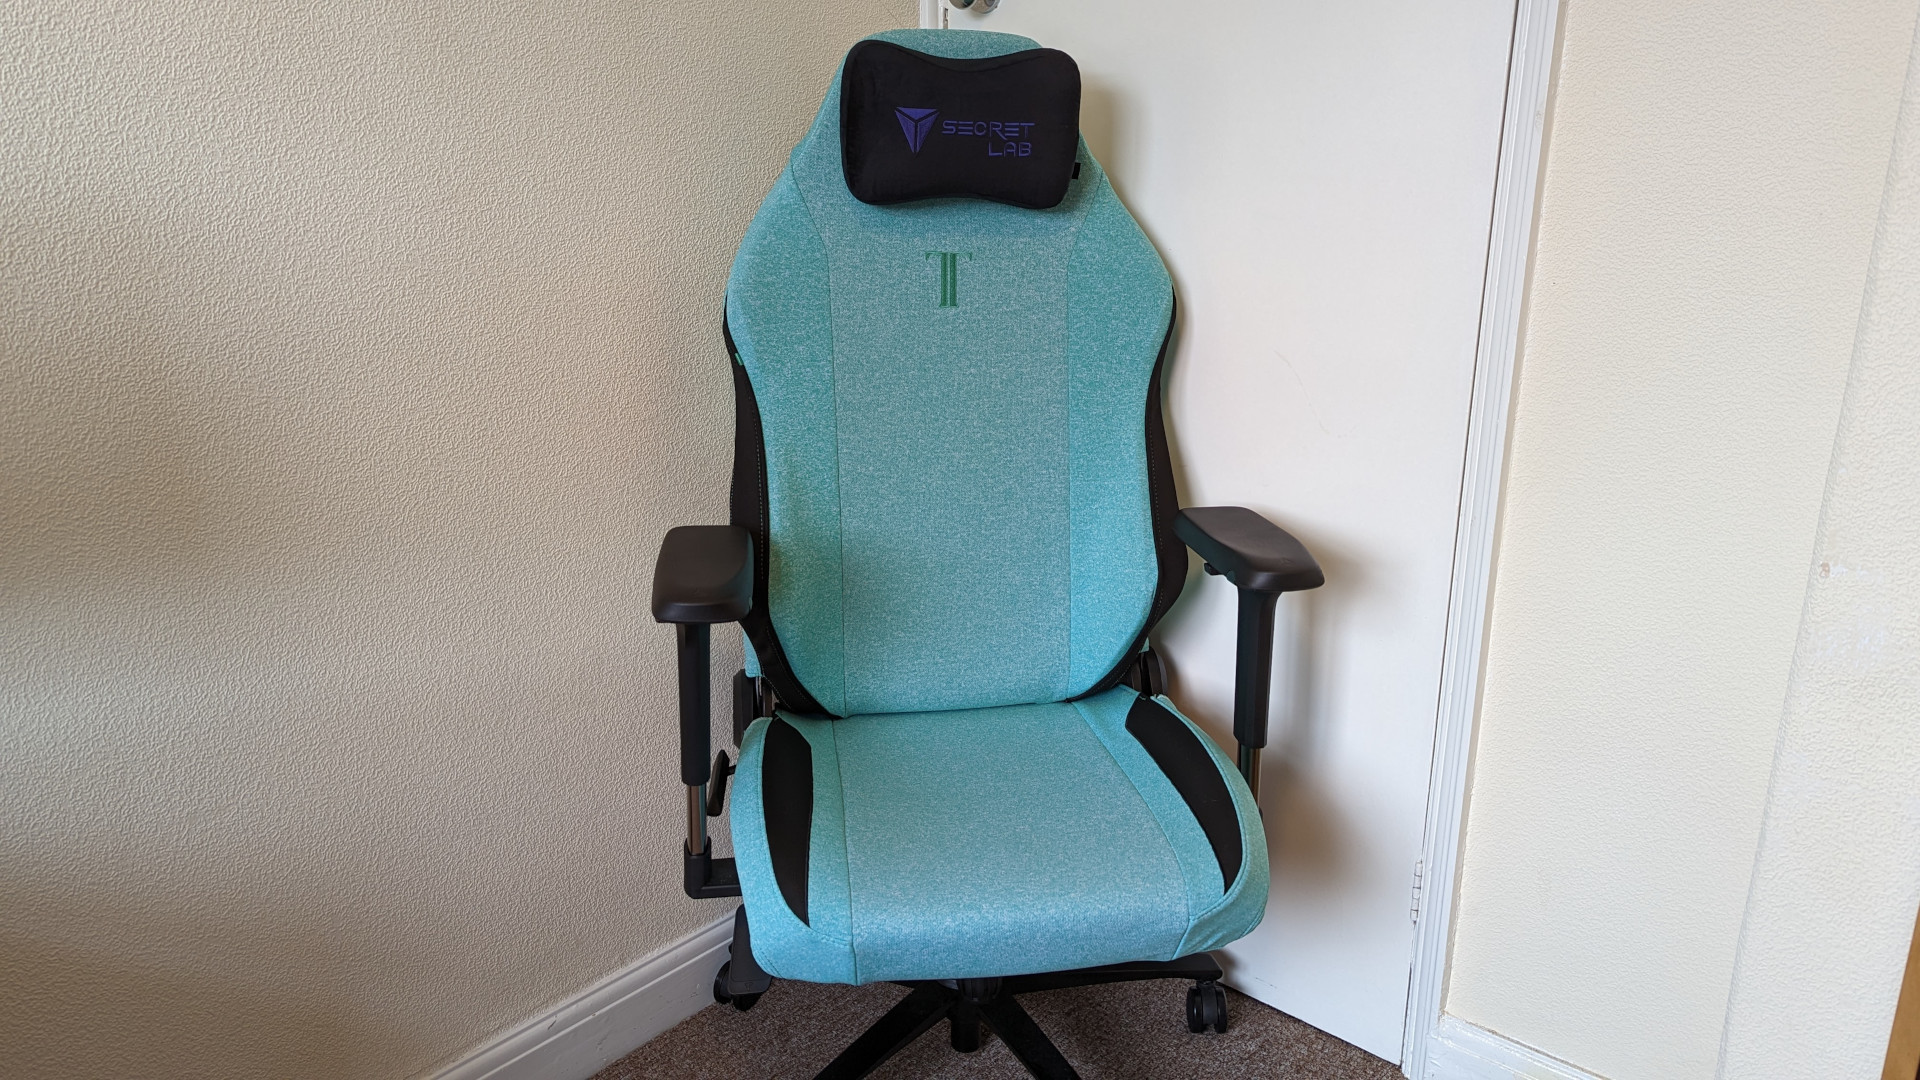 A Secretlab Titan Evo 2022 series with a Secretlab Chair Skin applied to it